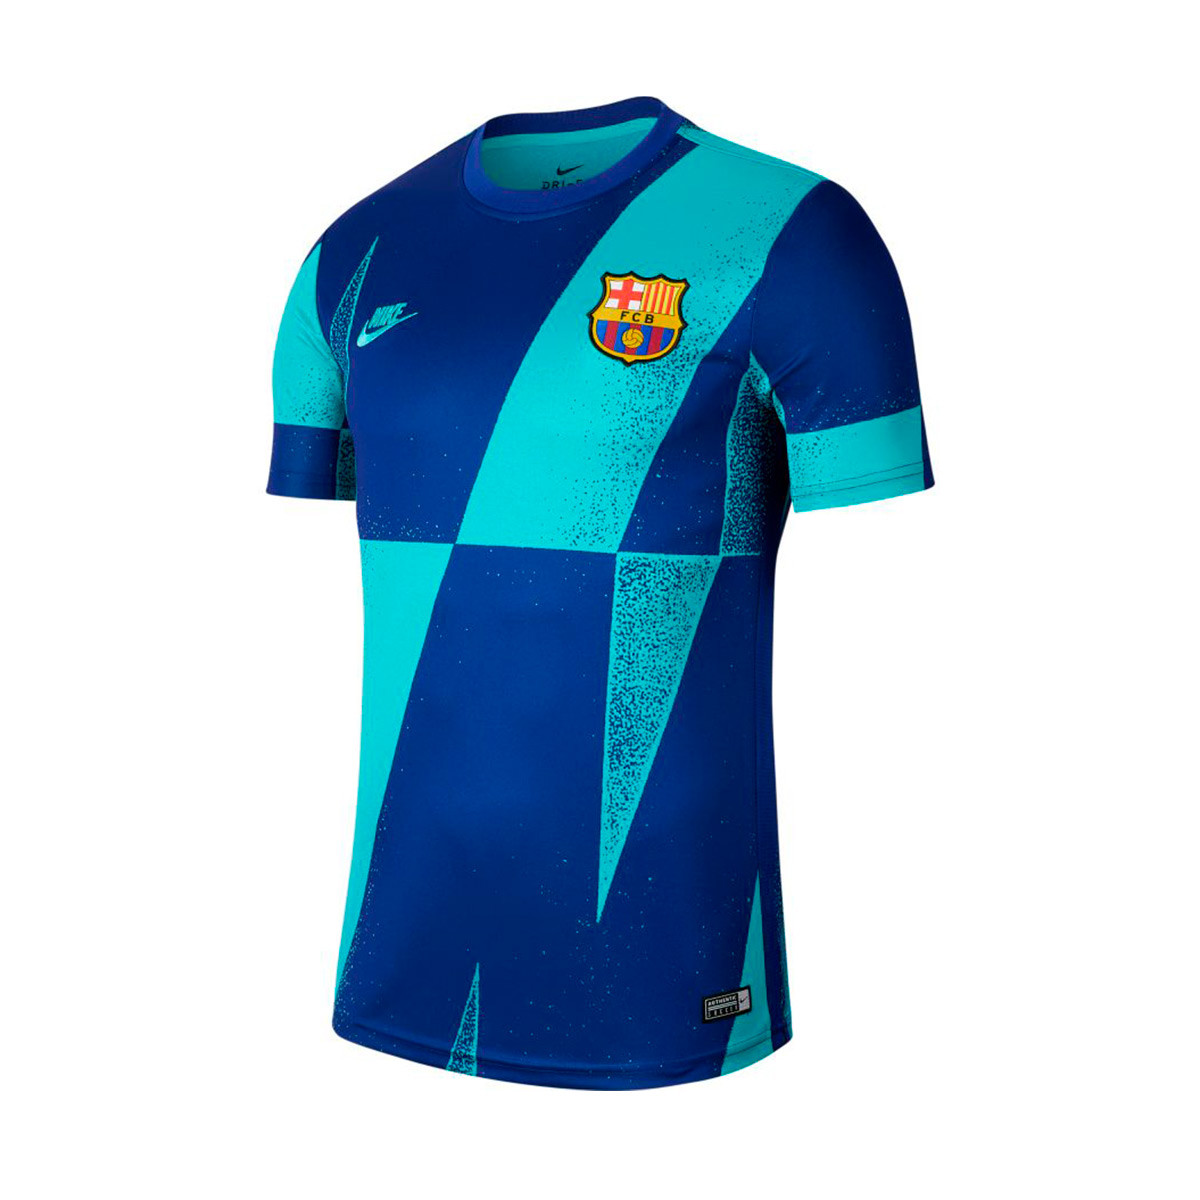 Camiseta Nike FC Barcelona Dry 2019-2020 Cabana-Deep royal blue - Tienda de fútbol Fútbol Emotion